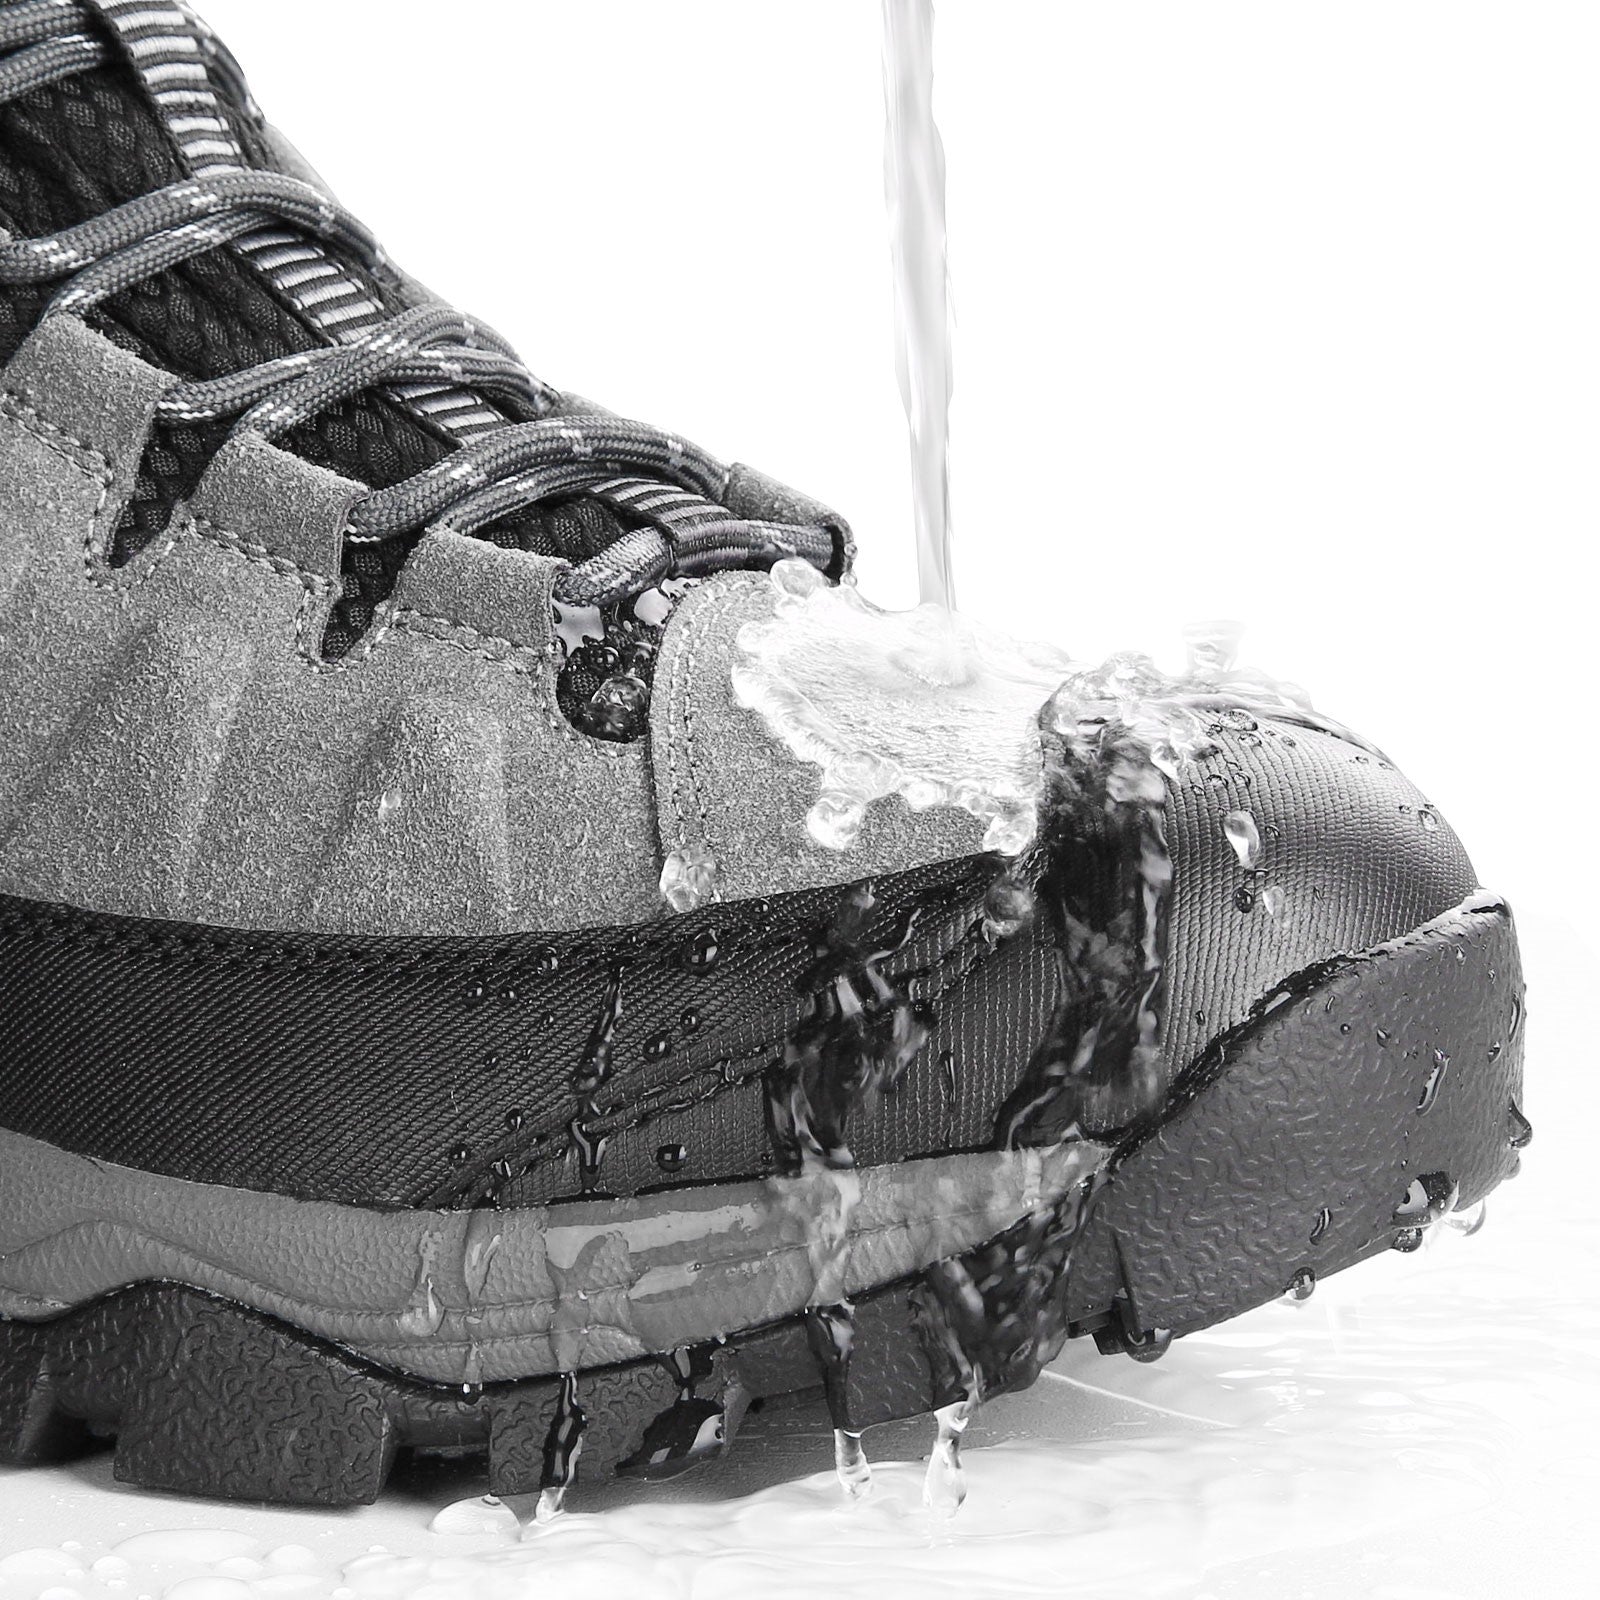 Lightweight Non-Slip Hiking Boots